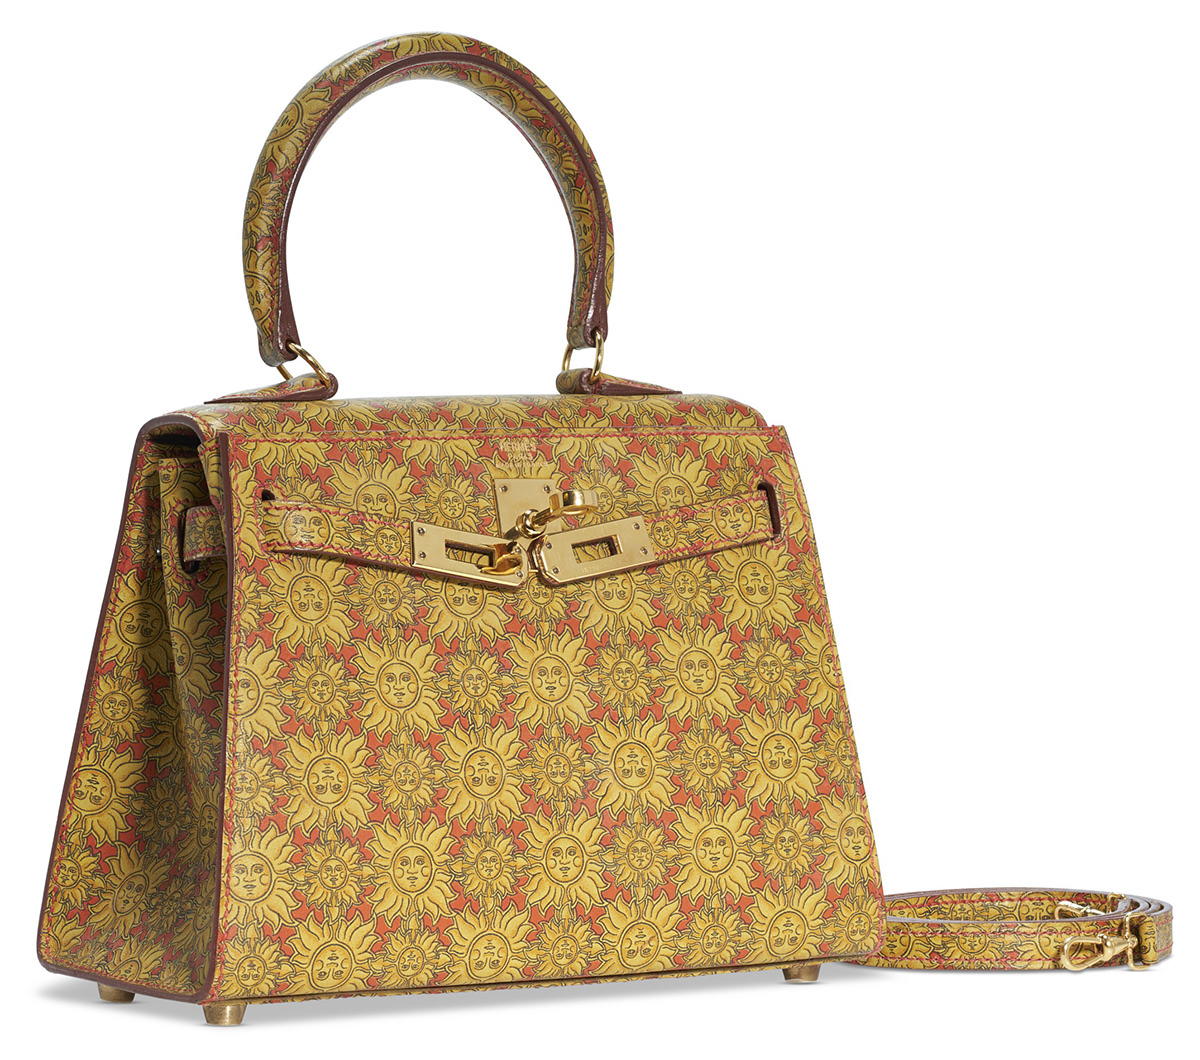 Rare Hermès Birkin handbag sets world record after selling for over  $200,000 at auction